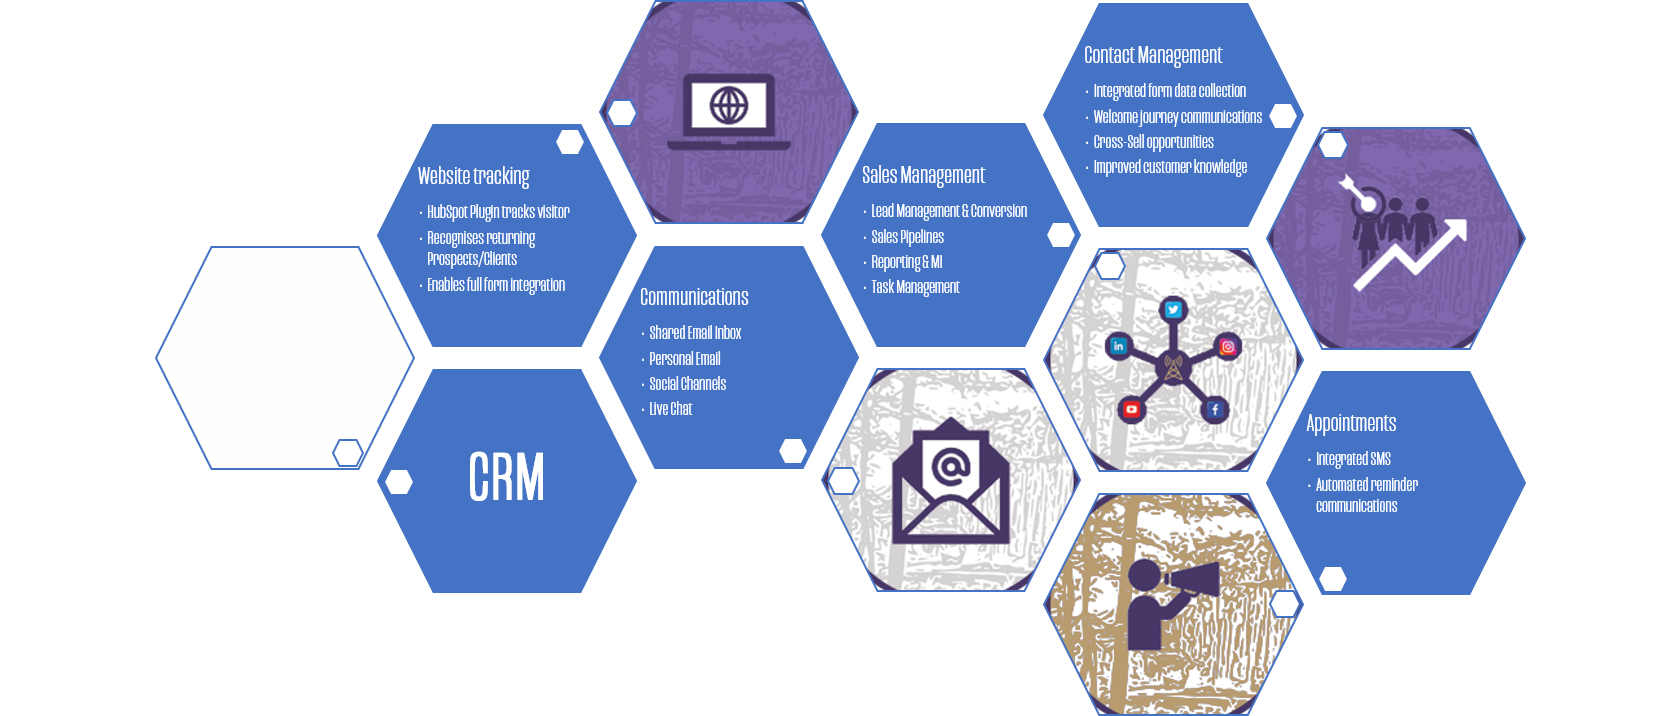 5 Benefits of Using CRM Platforms